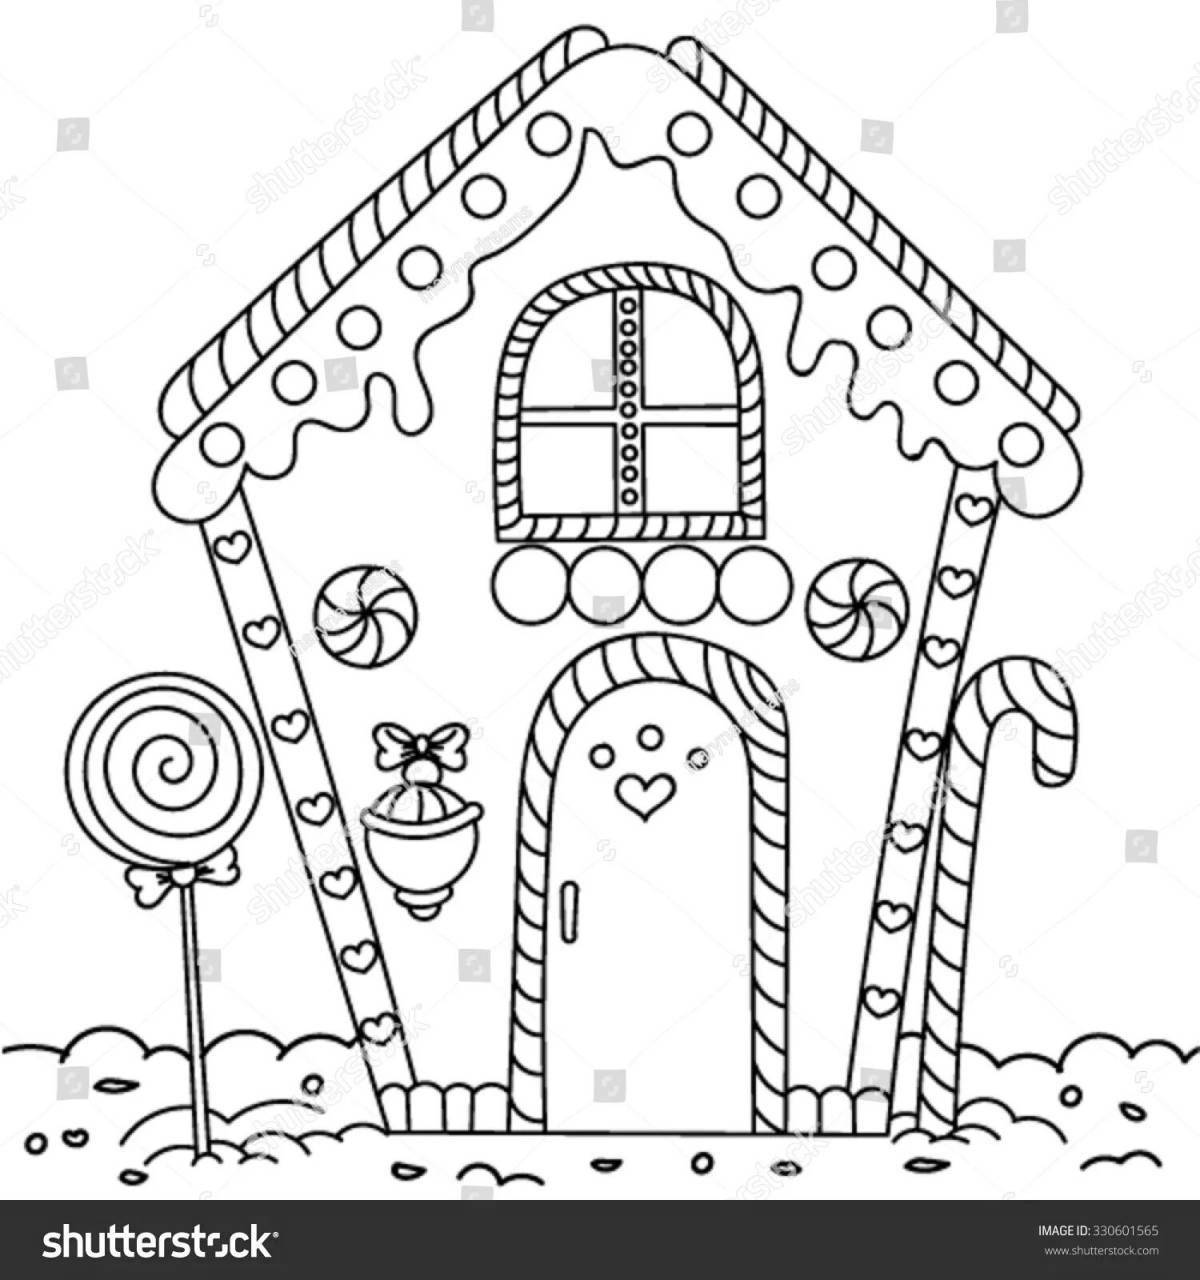 Joyful coloring fairytale gingerbread house